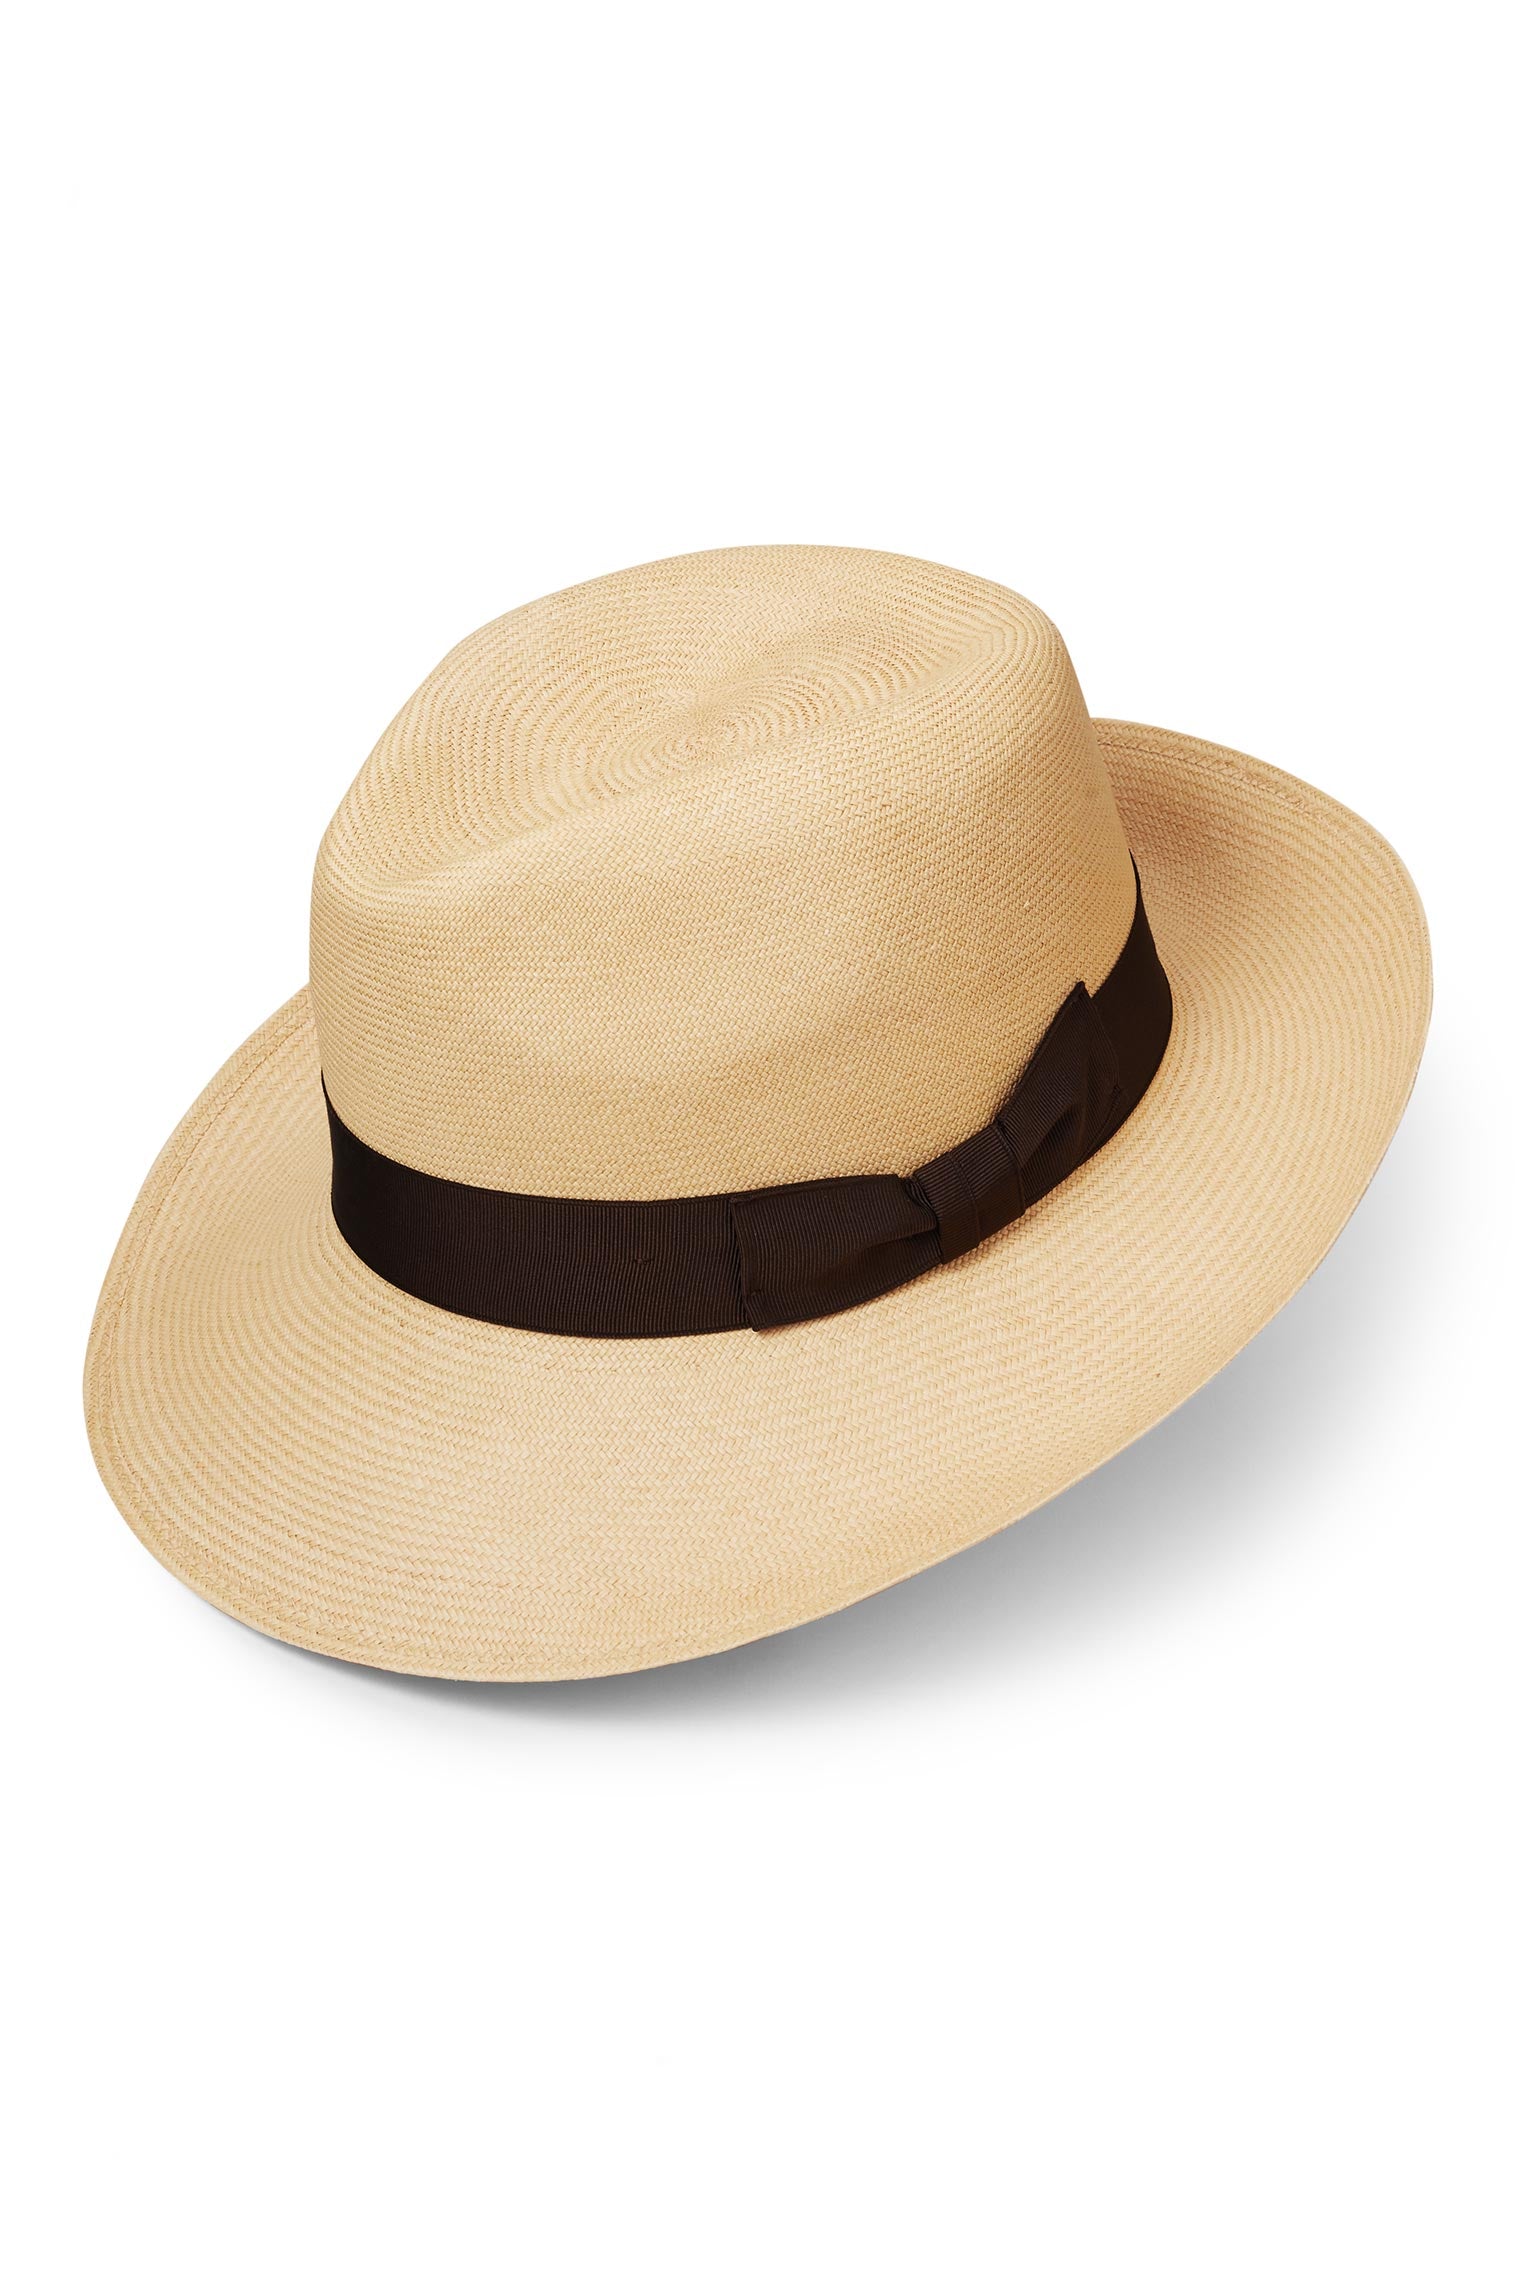 Ventnor Cuenca Ultra-fino Panama - Panama Hats - Lock & Co. Hatters London UK